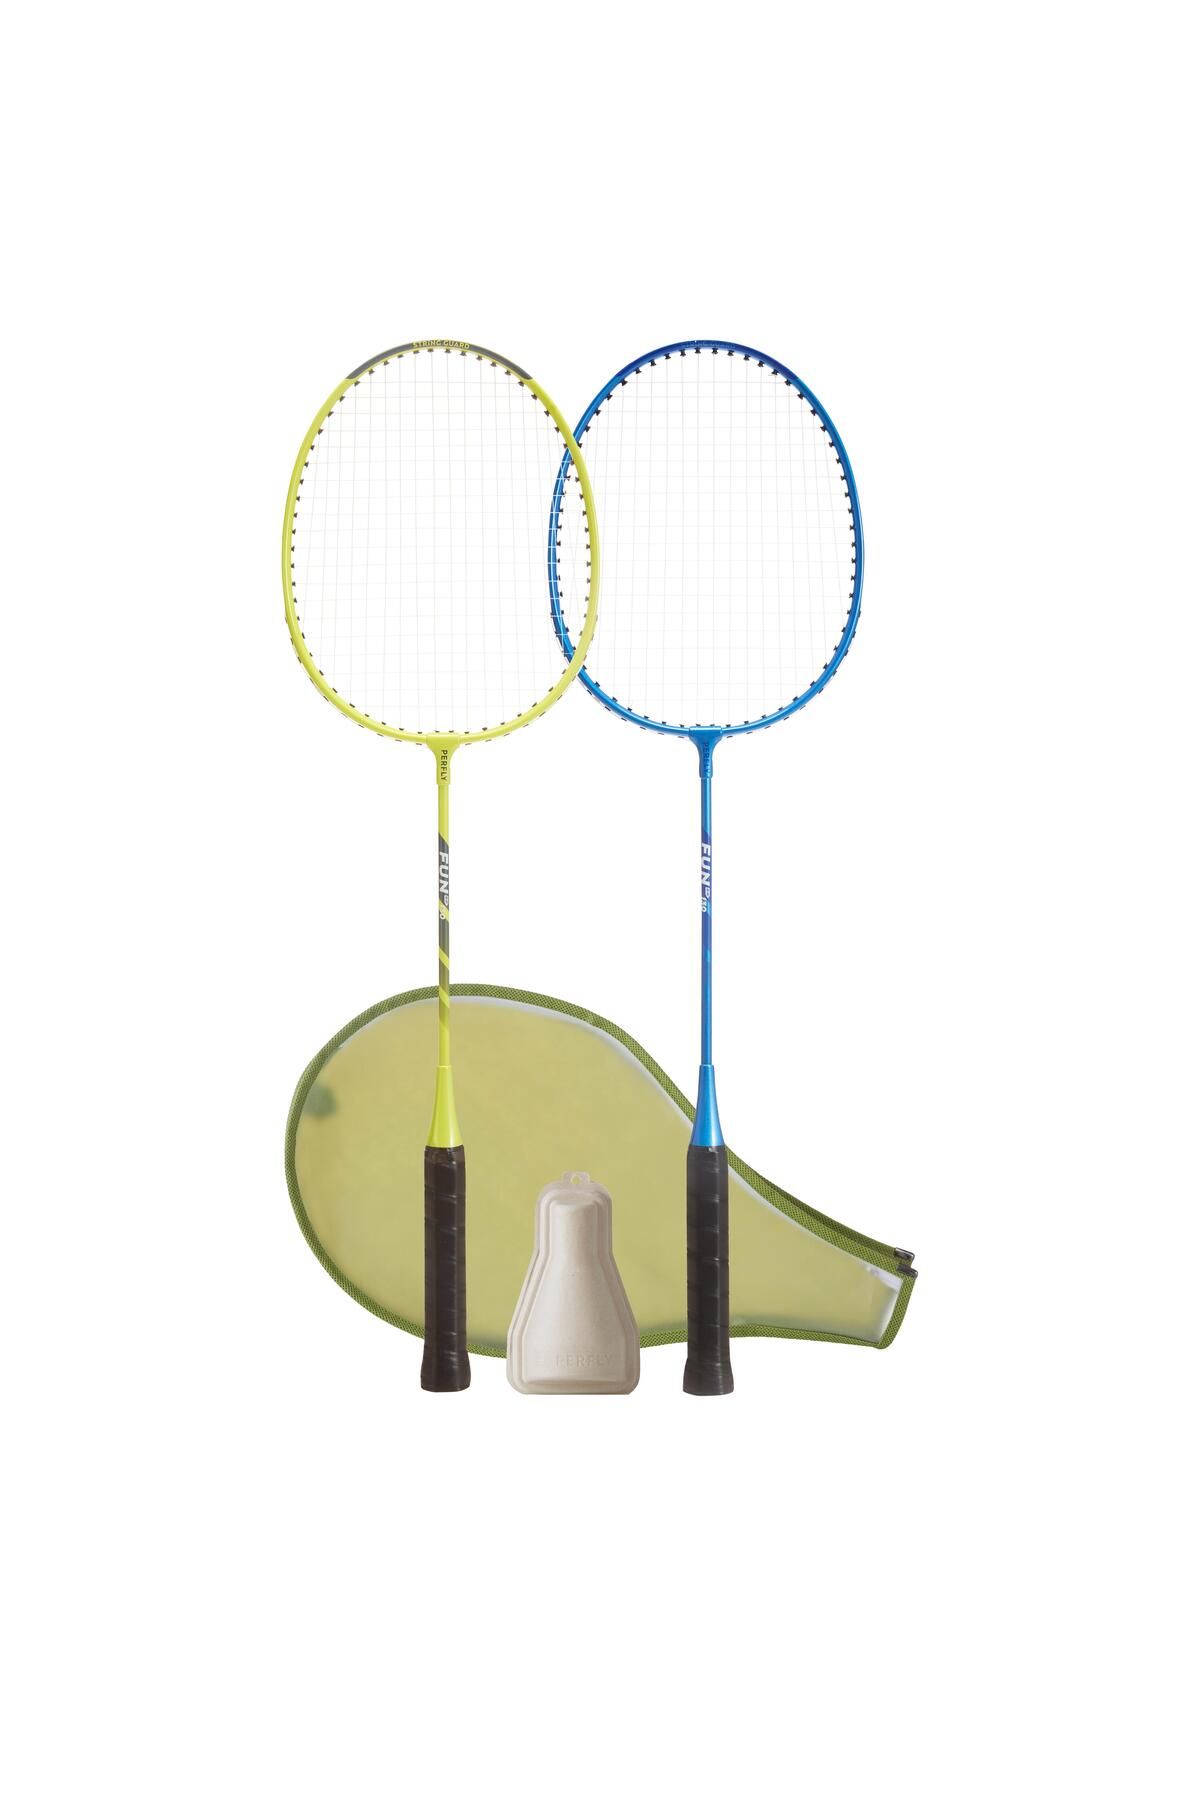 Decathlon Yetişkin Badminton Raket Seti - Sarı / Mavi - Fun BR130 AD